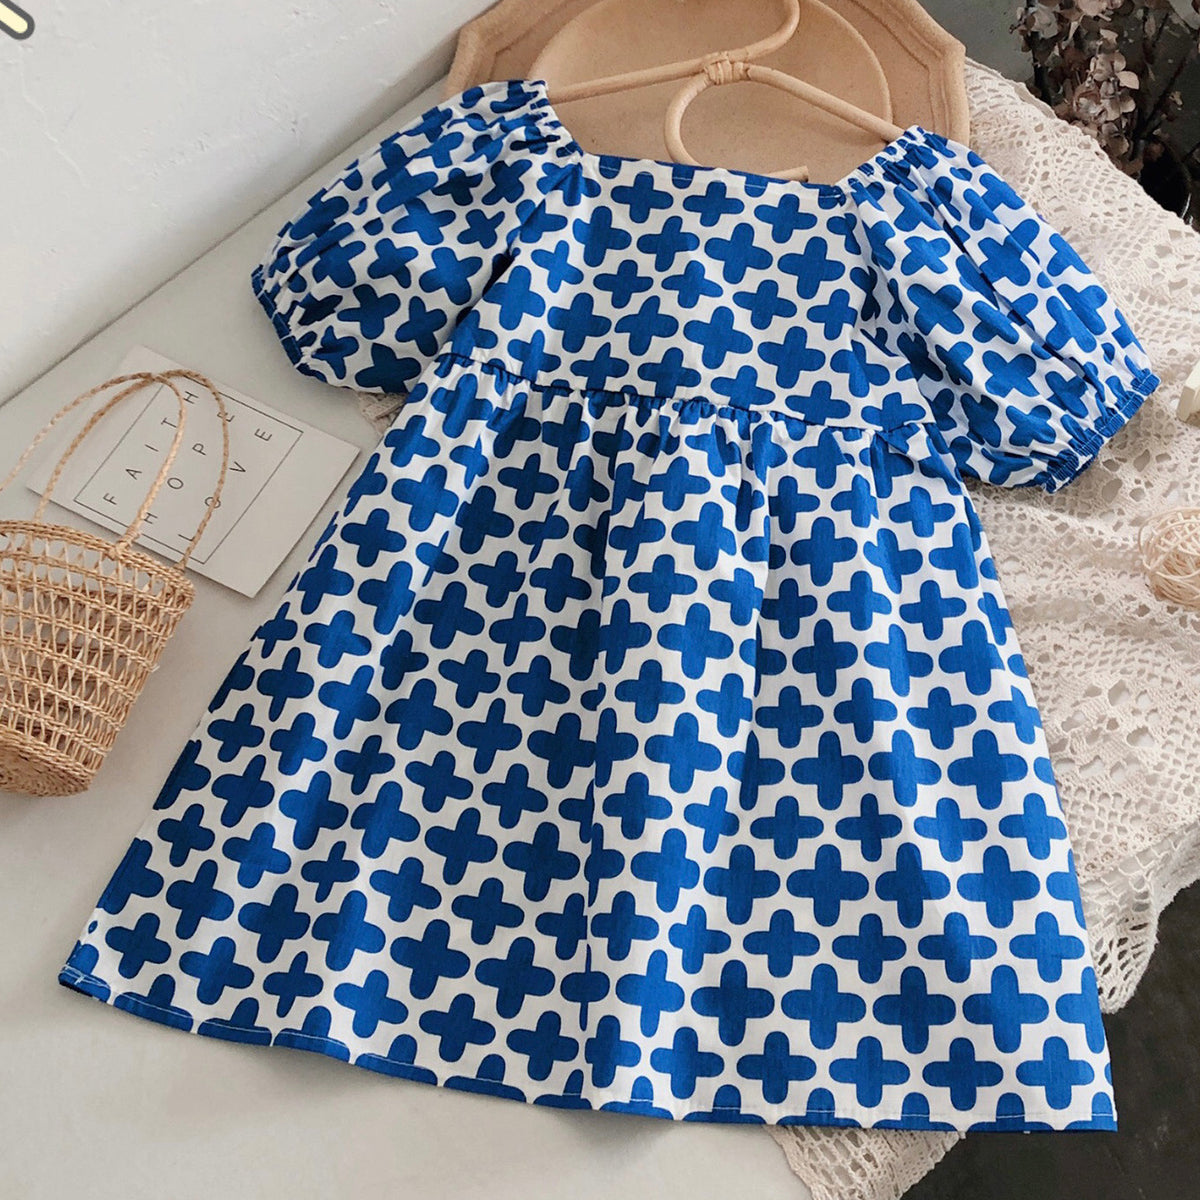 Princess Stylish BabyGirl's Blue Plus & Green Floral Designer Tunic Dresses_Frockes Combo for Kids.